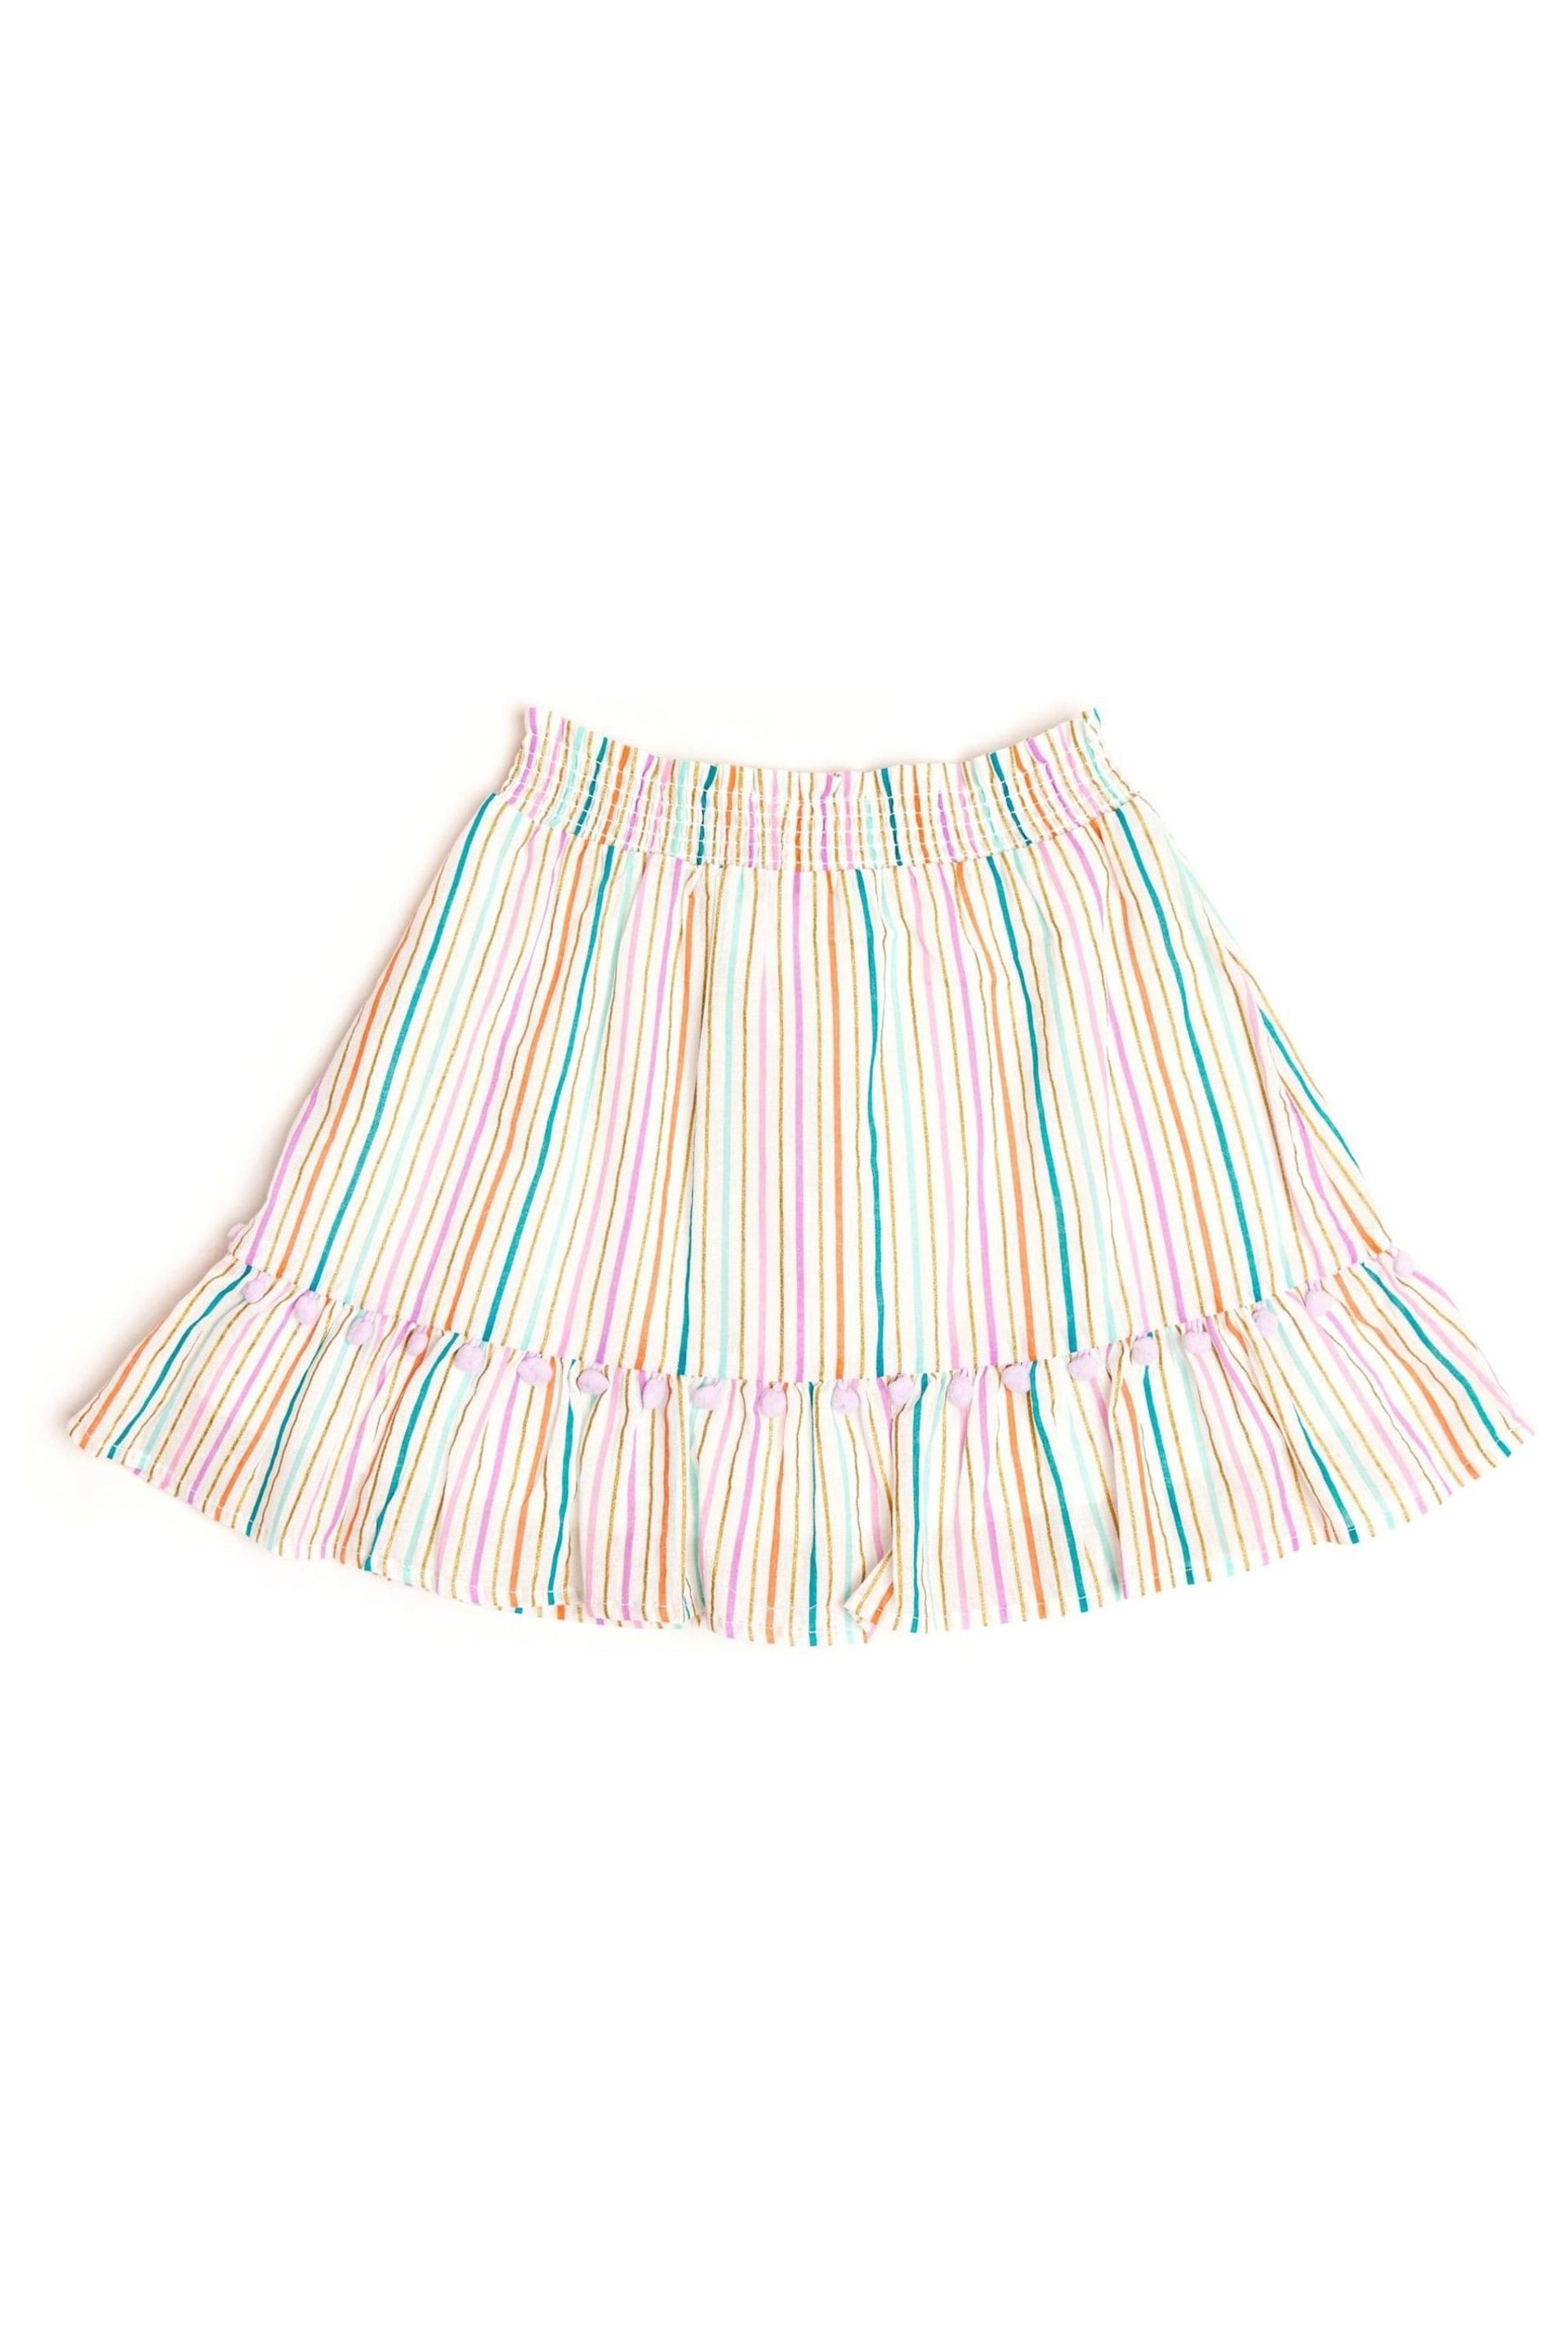 Nicole Miller Striped Cotton Multi Skirt - Image 2 of 4